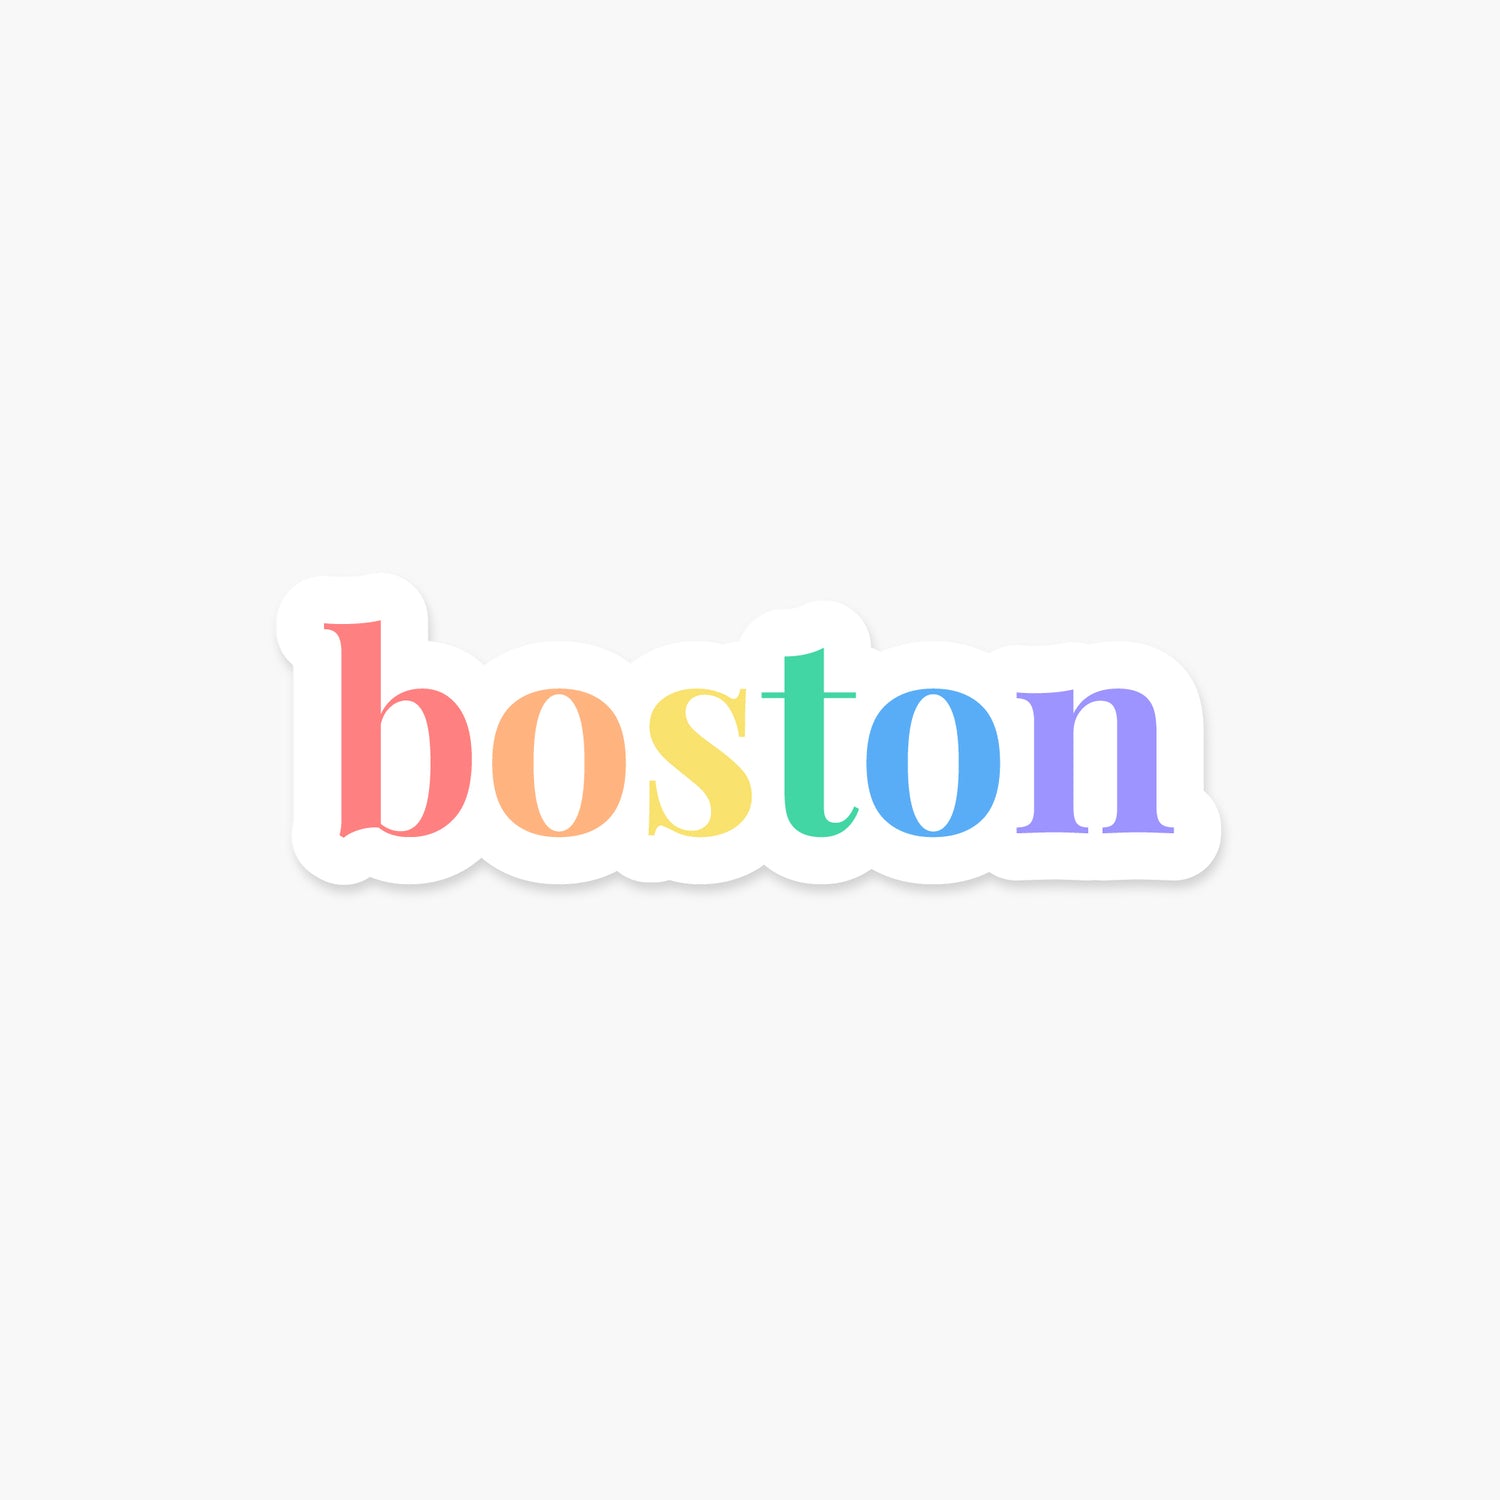 Boston, Massachusetts - Everyday Sticker | Footnotes Paper